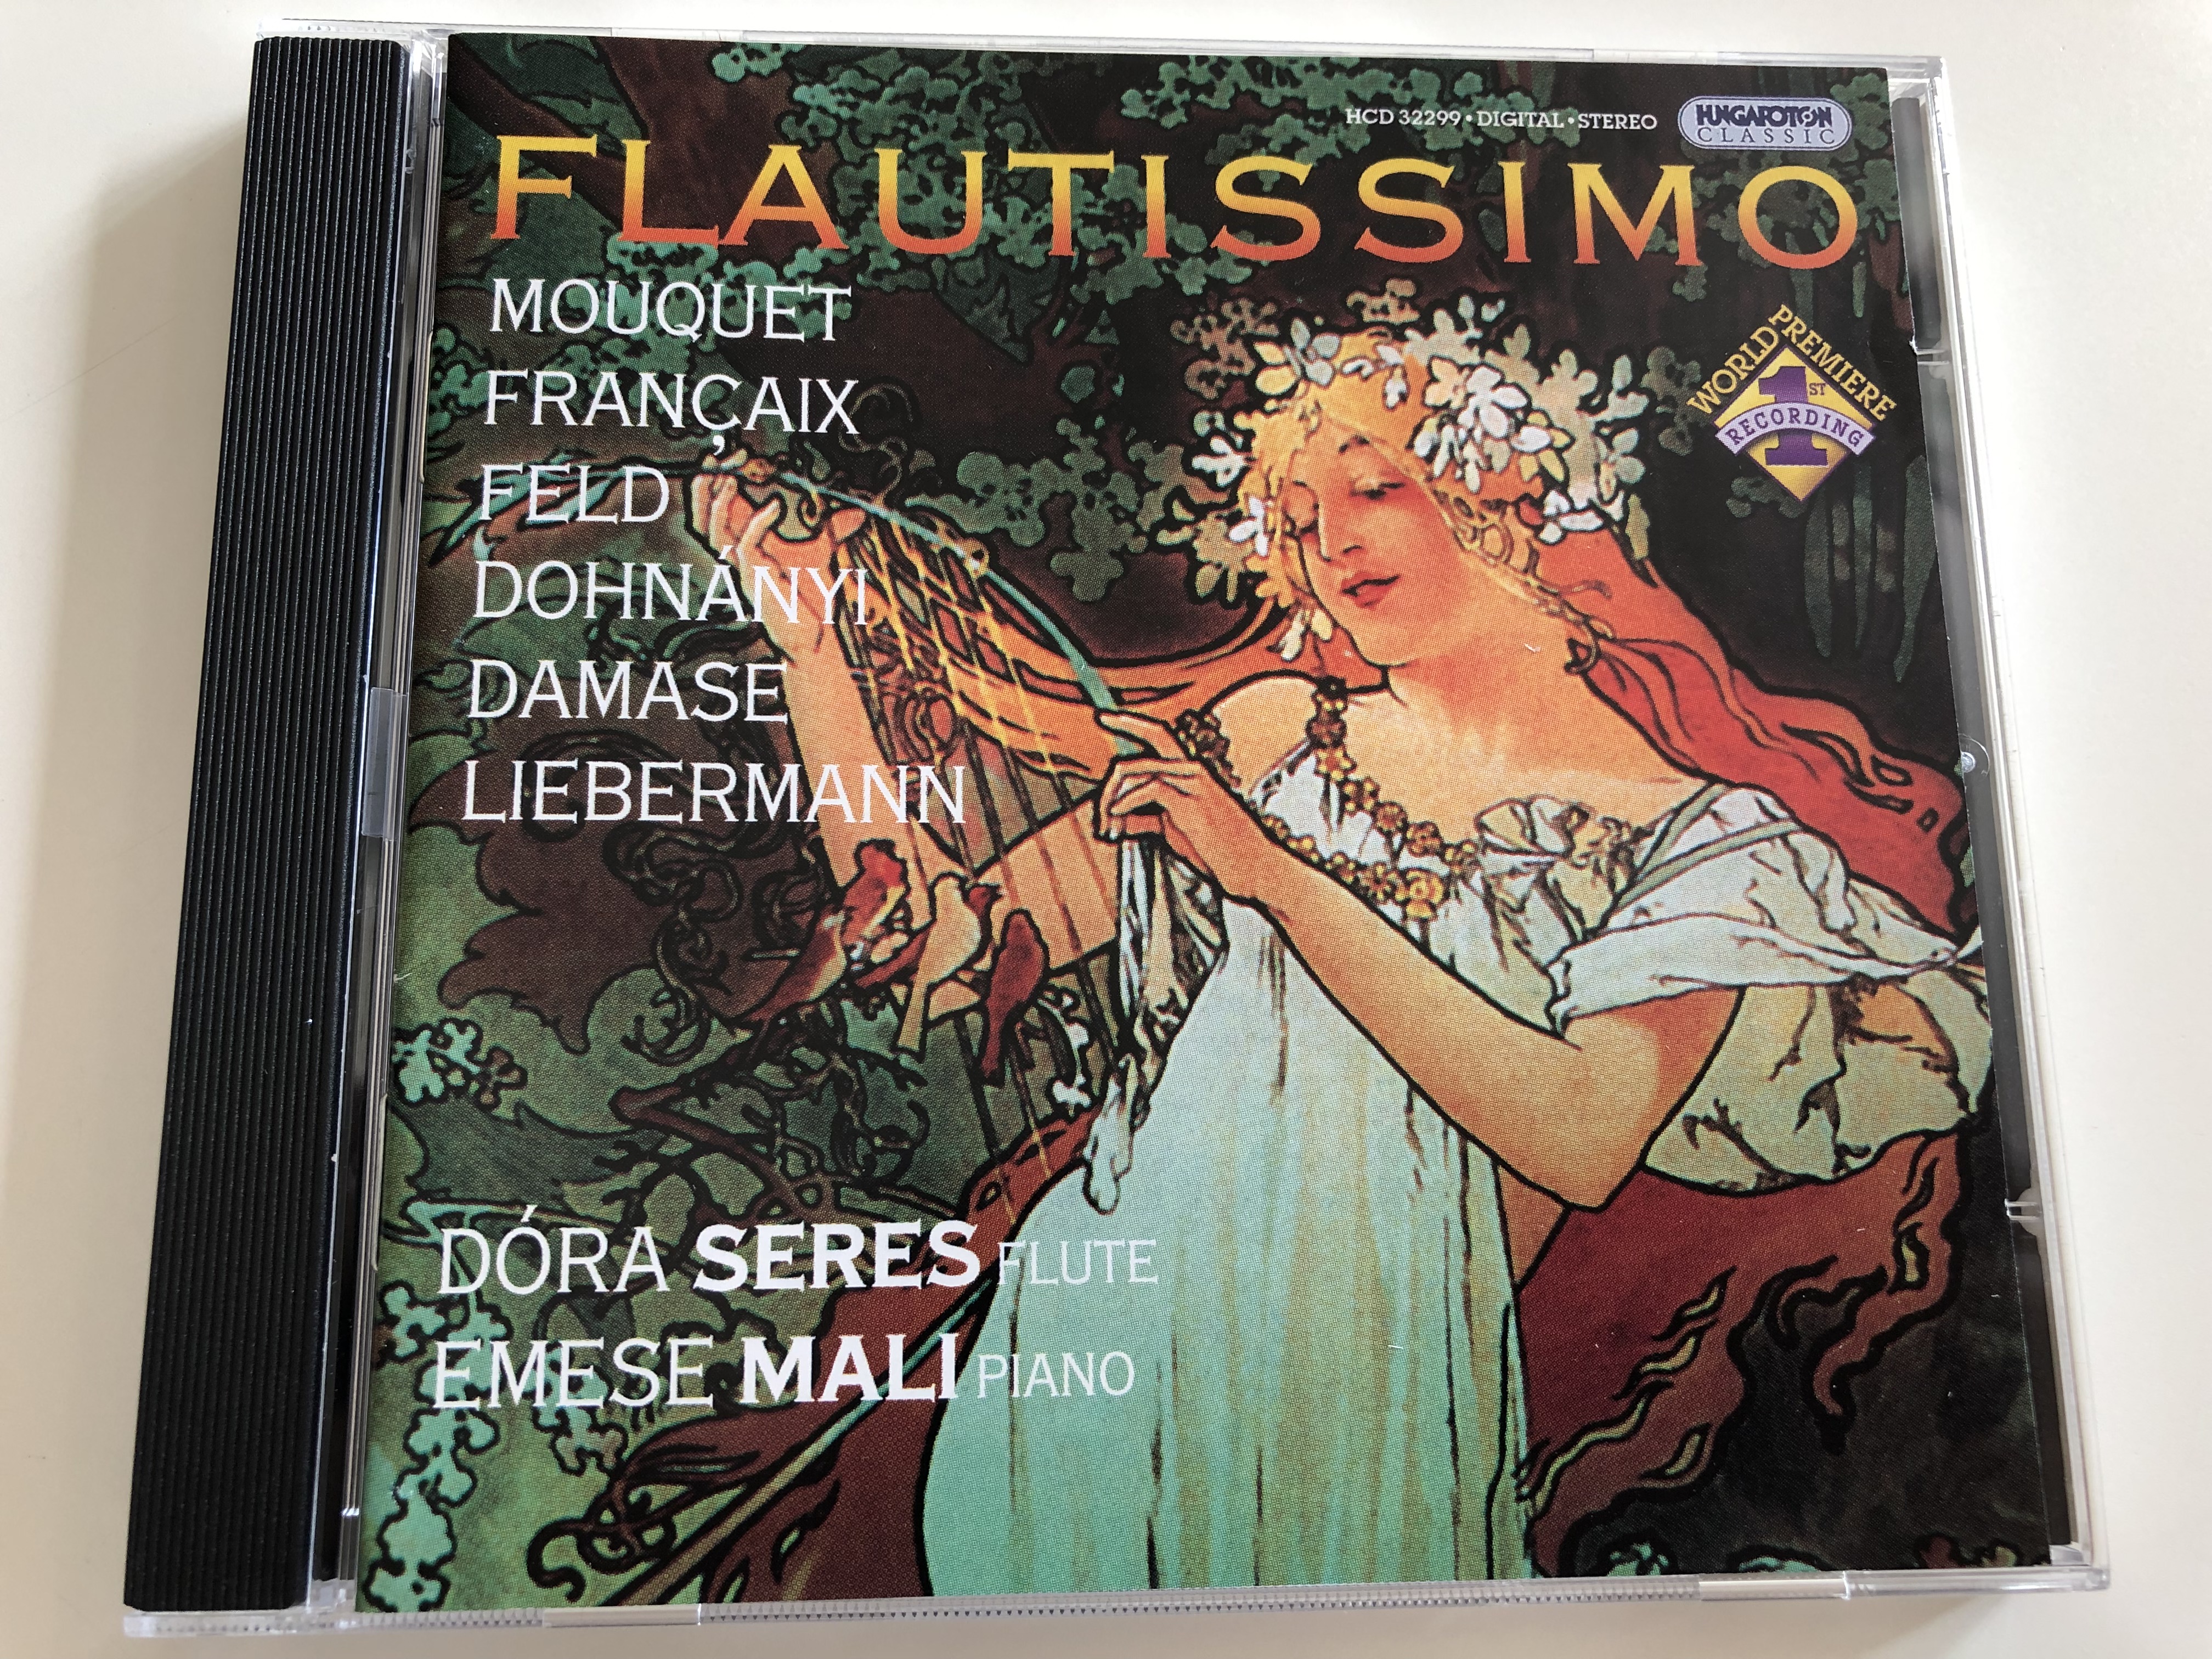 flautissimo-mouquet-francaix-feld-dohn-nyi-damase-liebermann-d-ra-seres-flute-emese-mali-piano-audio-cd-2004-hcd-32299-hungaroton-1-.jpg